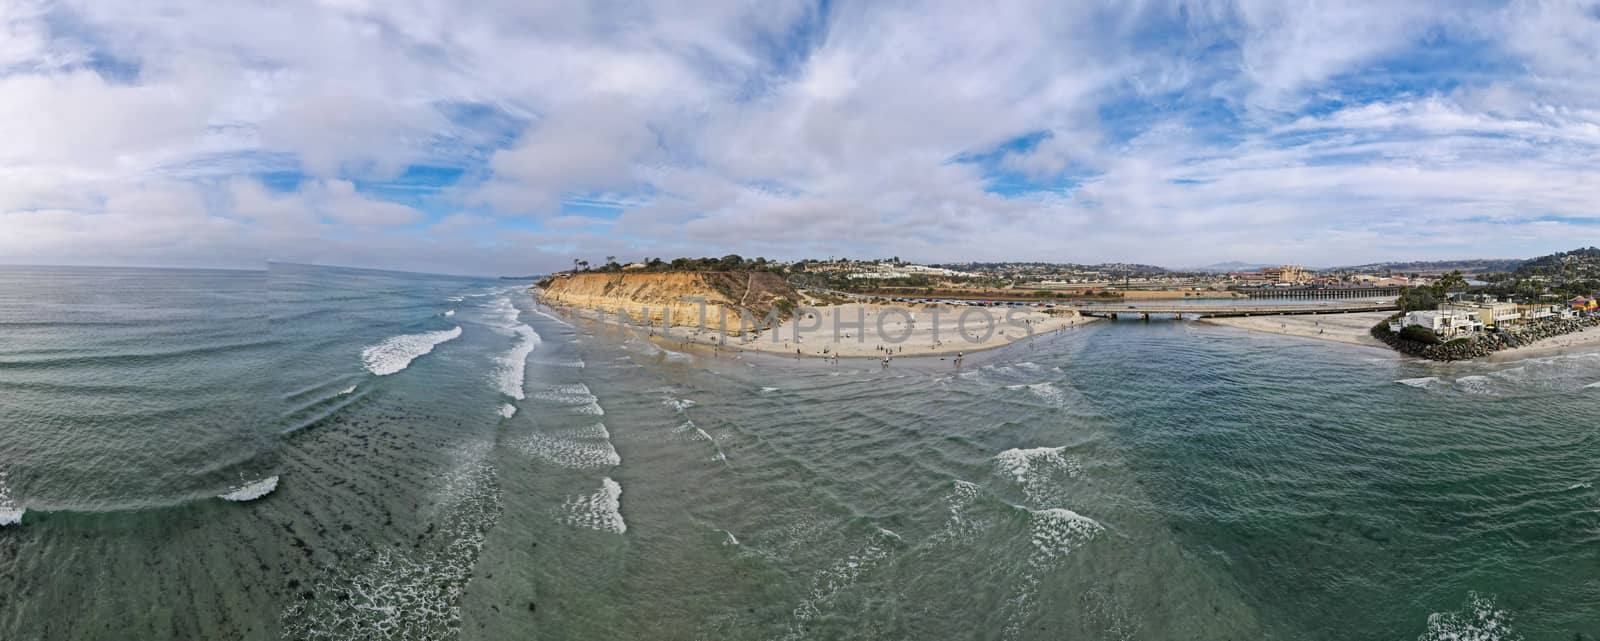 Aerial view of Del Mar North Beach, California coastal cliffs and House with Pacific ocean by Bonandbon